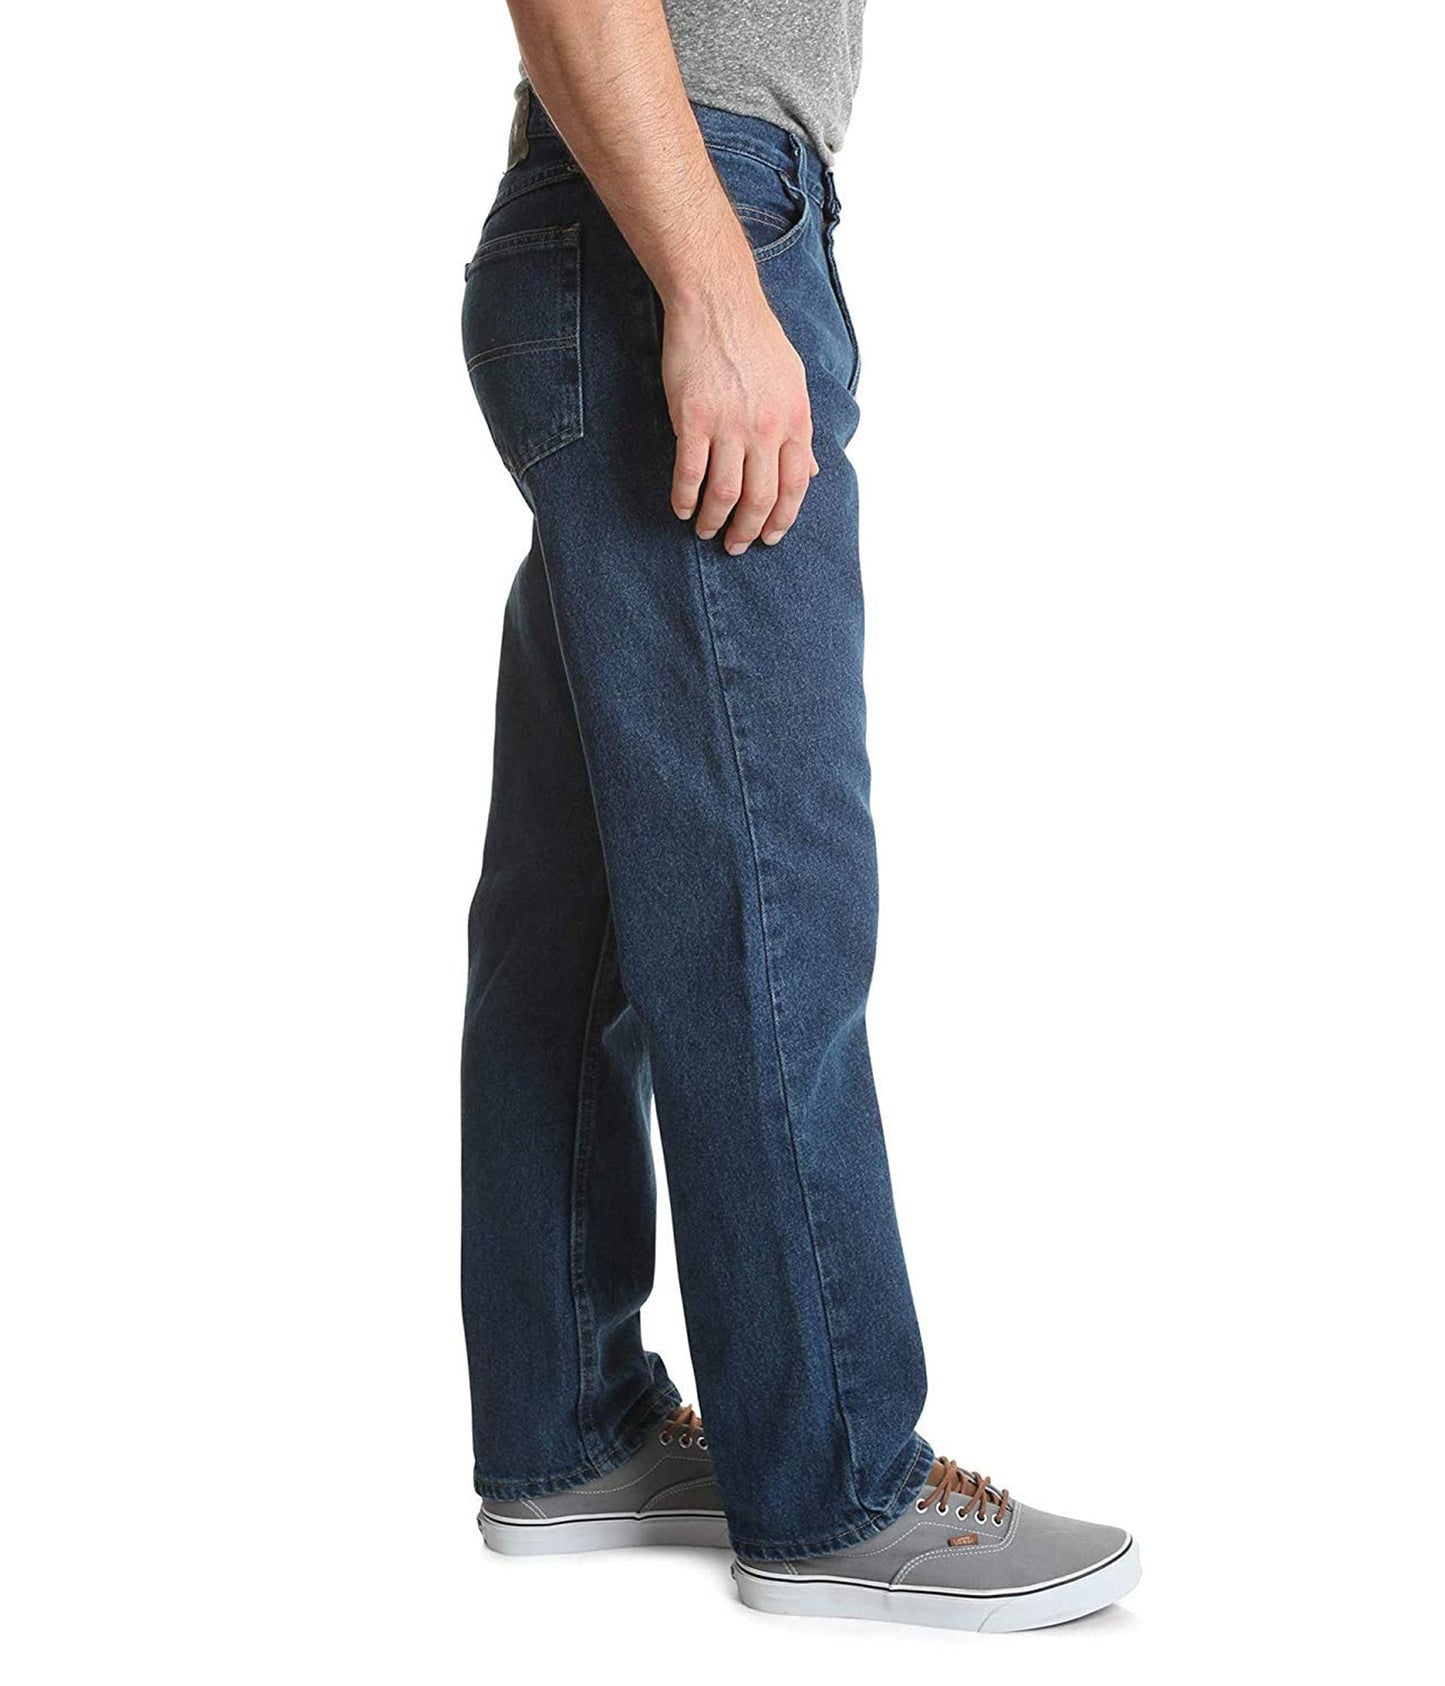 Wrangler Authentics Men's Classic 5-Pocket Relaxed Fit Cotton Jean, Dark Stonewash, 32W x 29L